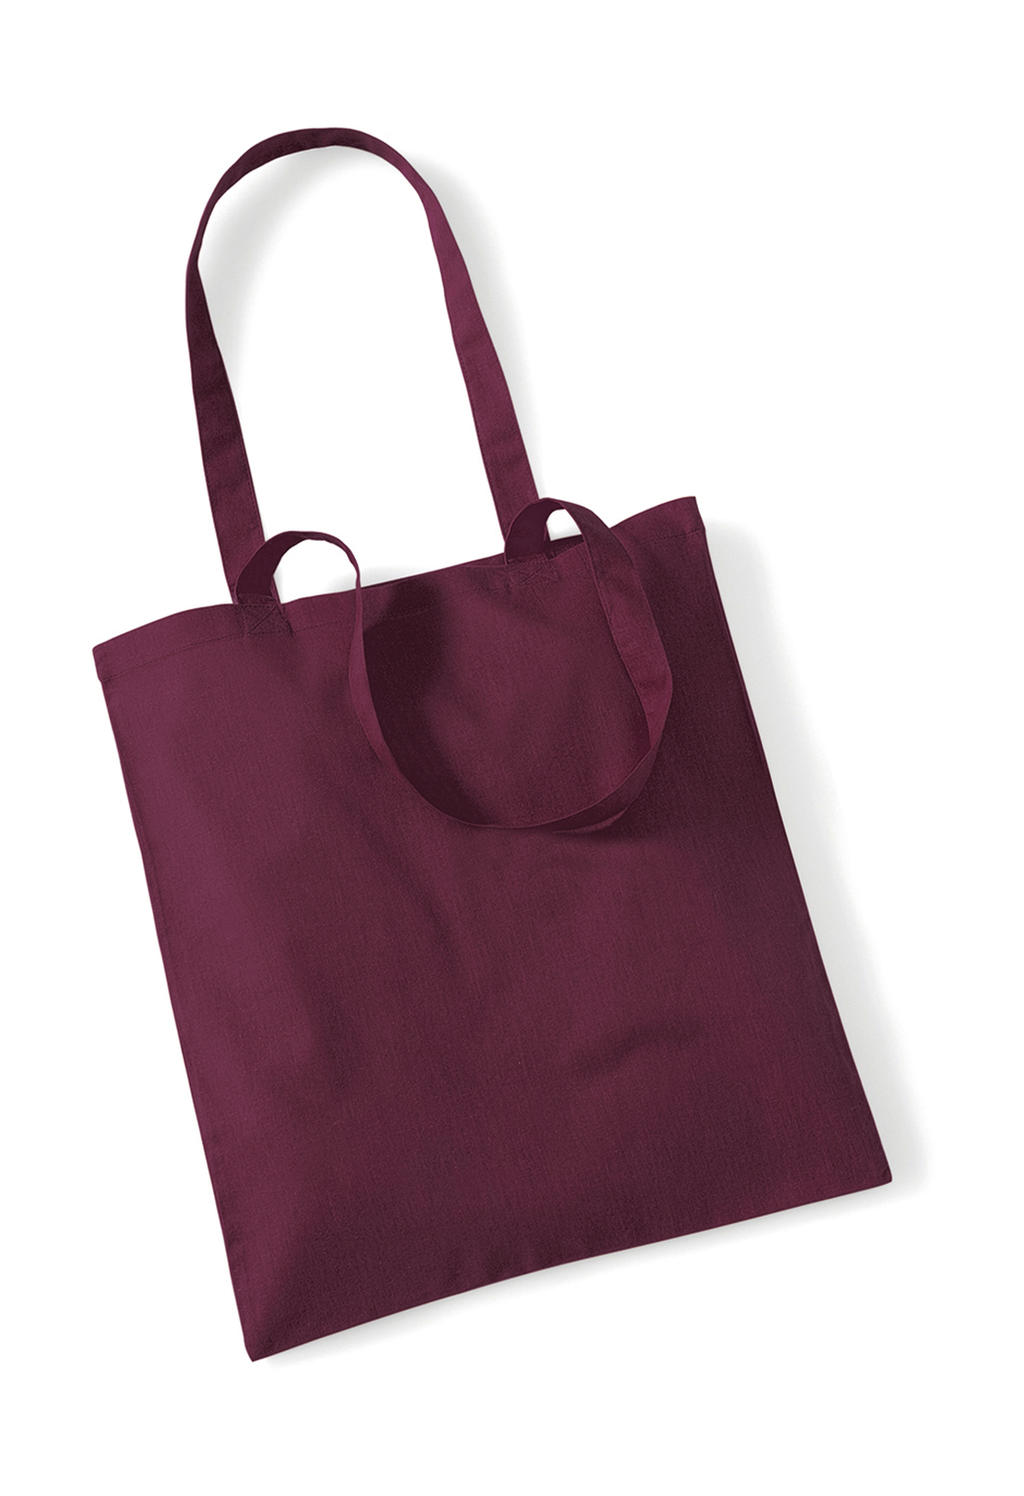 Bag for Life - Long Handles - burgundy